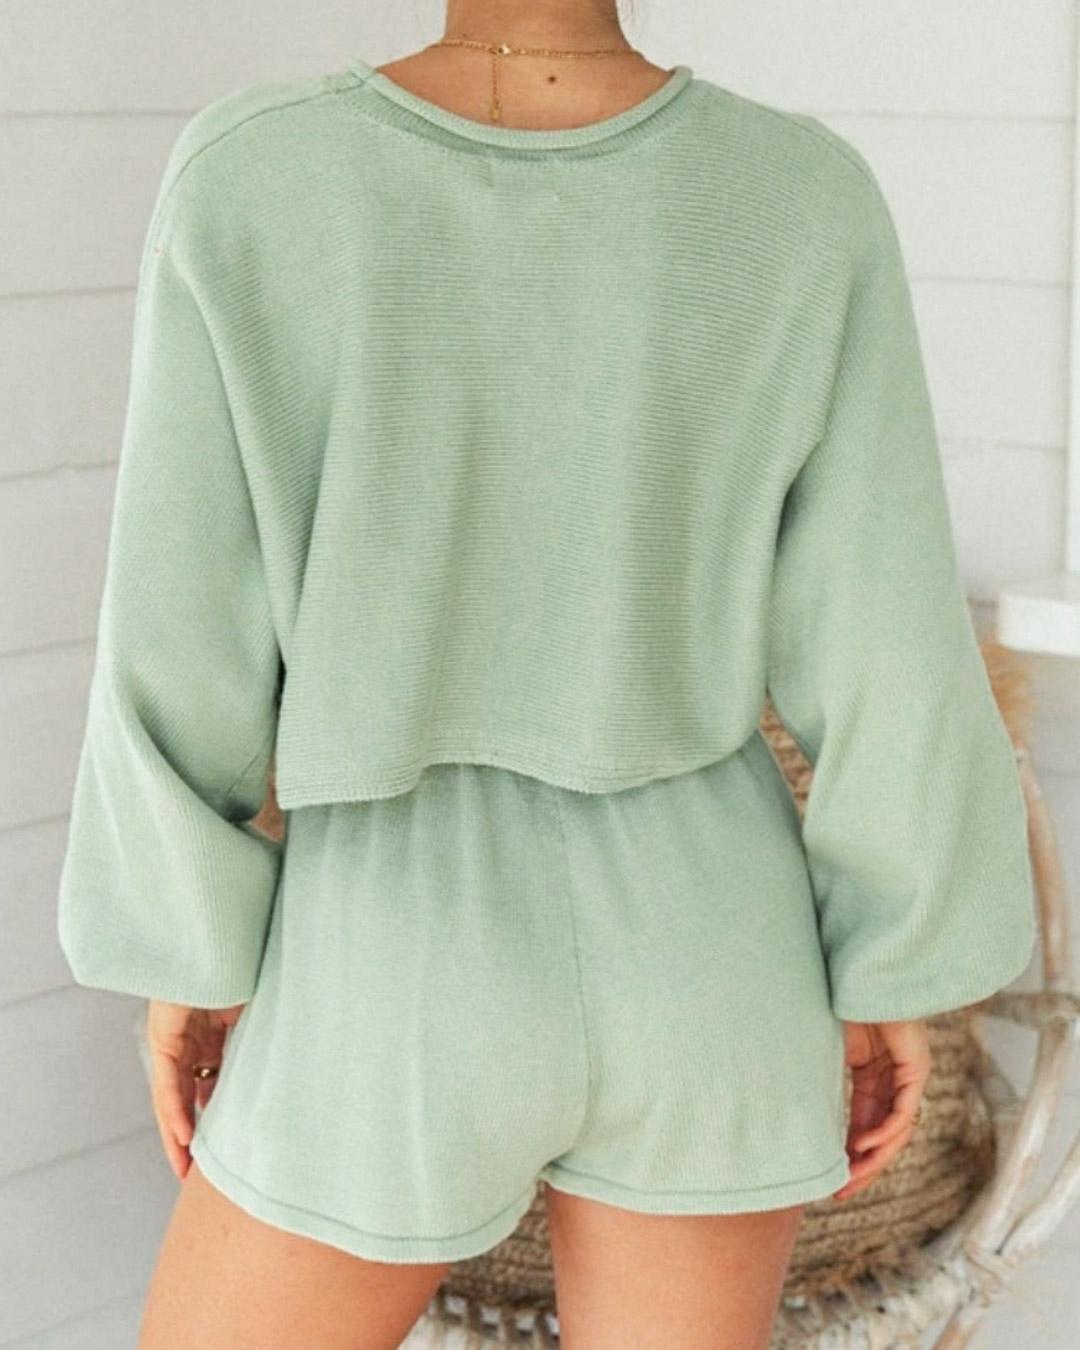 Solid Color Knit Casual Sweatshirt Sets